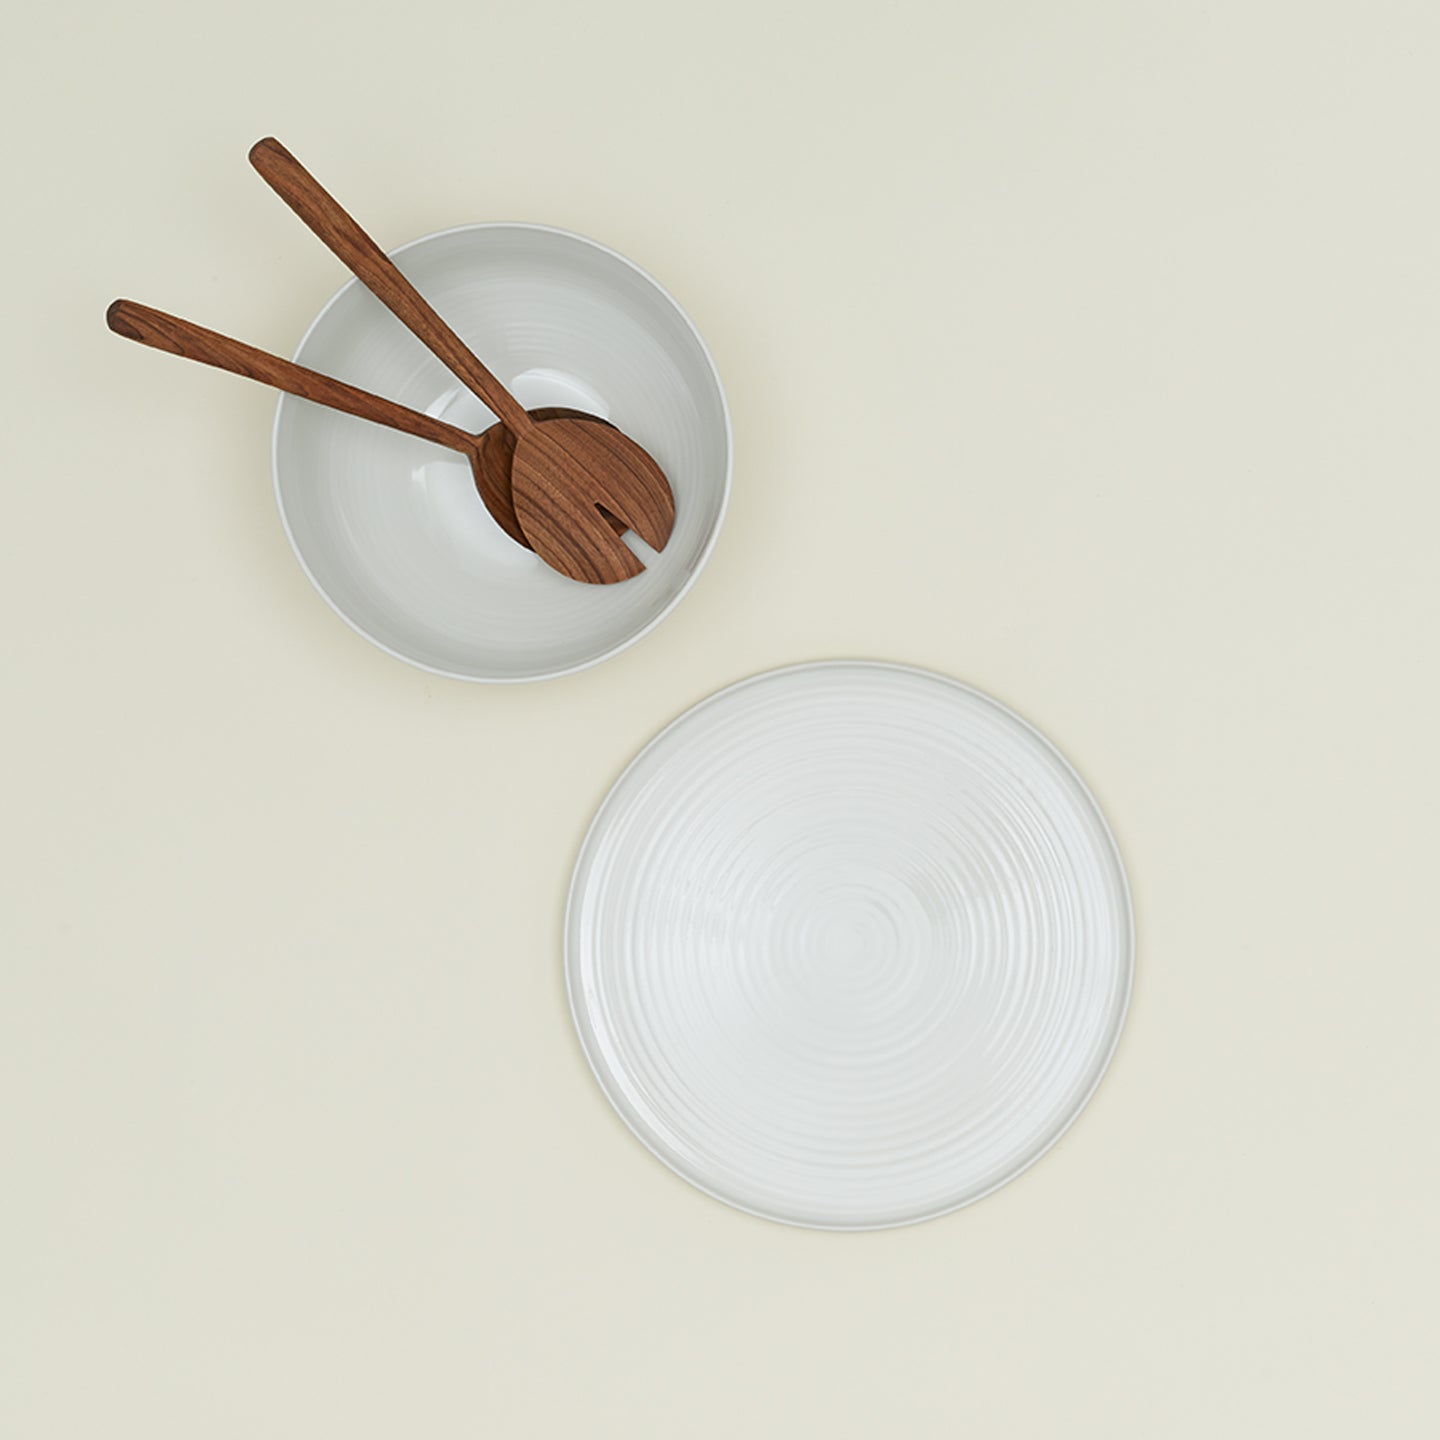 Essential Serving Platter and Serving Platter in Bone, with wood serving utensils.